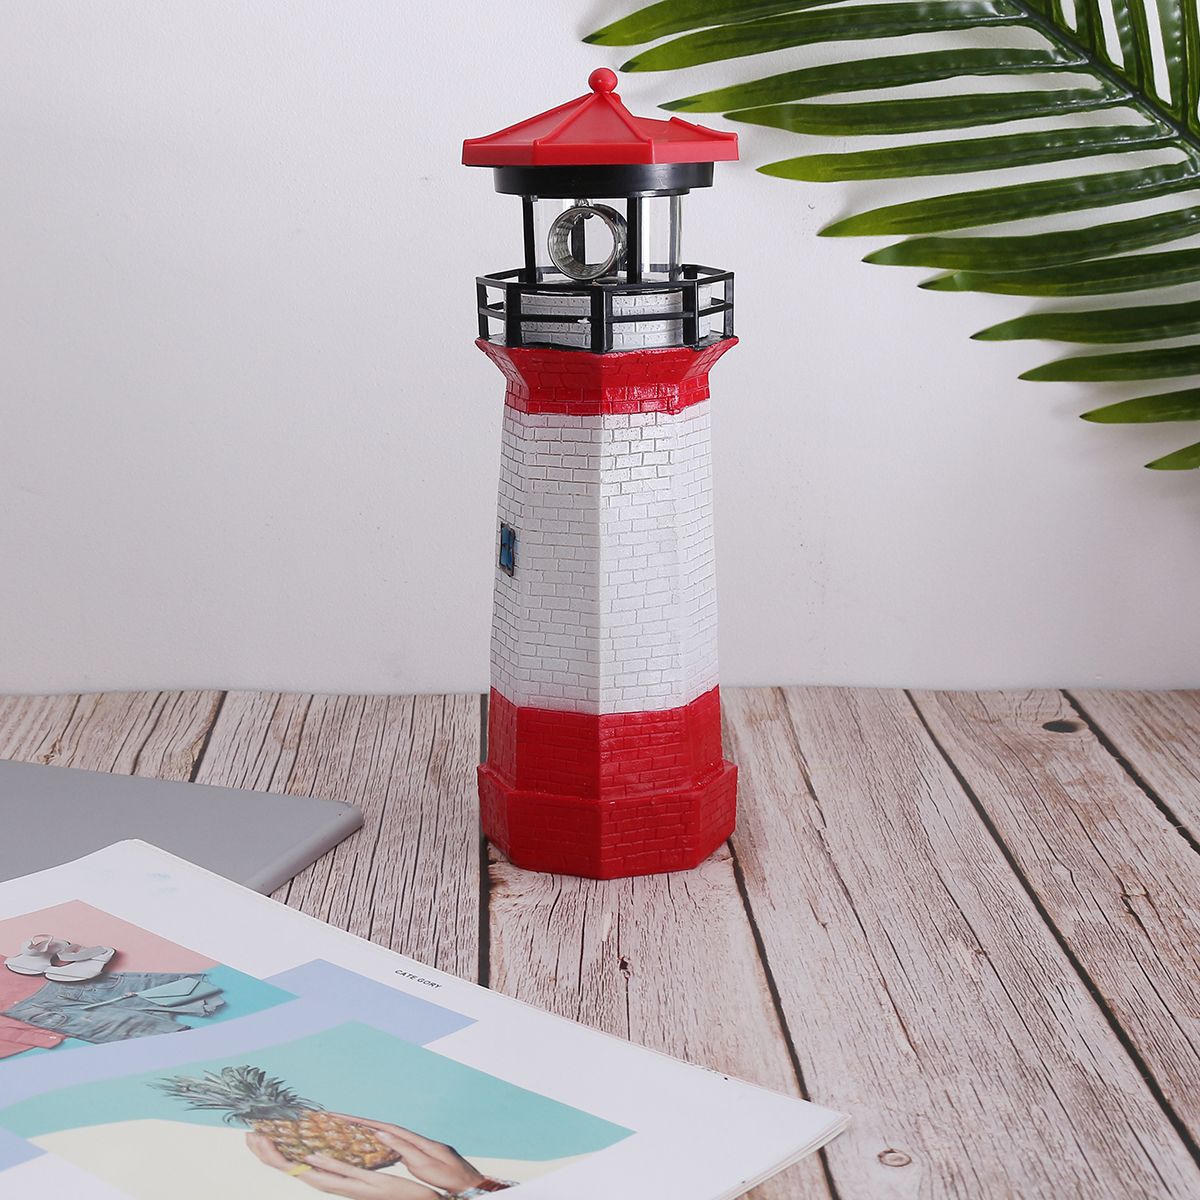 Solar-Powered-Garden-Lighthouse-Rotating-Beam-LED-Yard-Light-Ornament-Lamp-Home-Decor-1528138